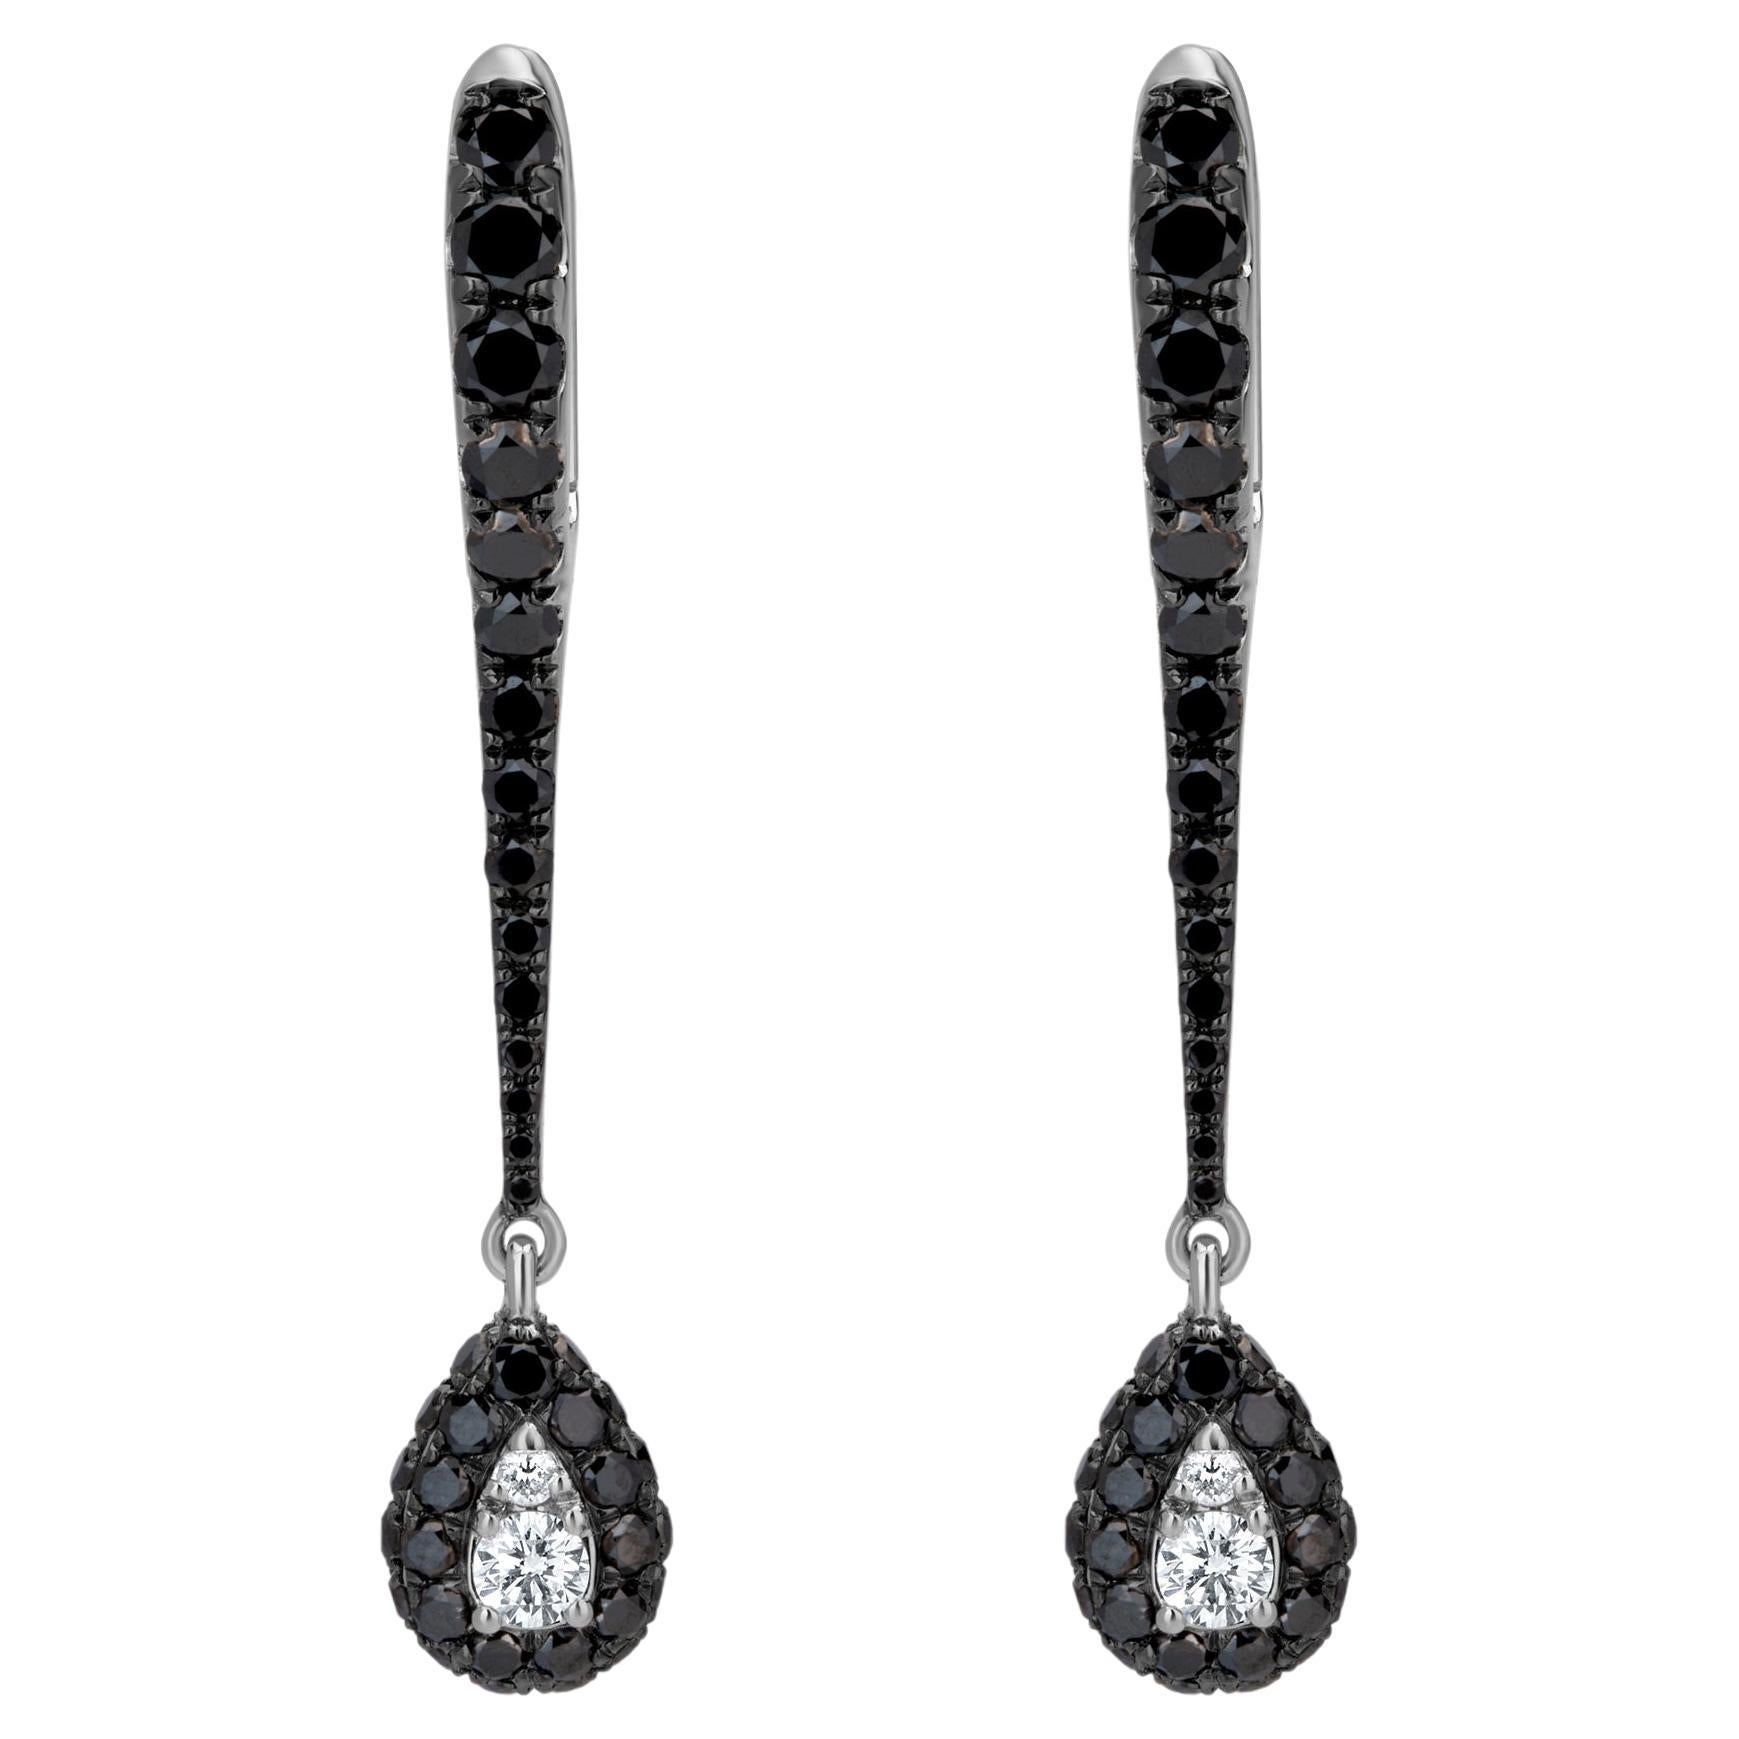 Luxle 1.36 Cttw. White & Black Diamond Drop Earrings in 18k Gold, Black Rhodium For Sale